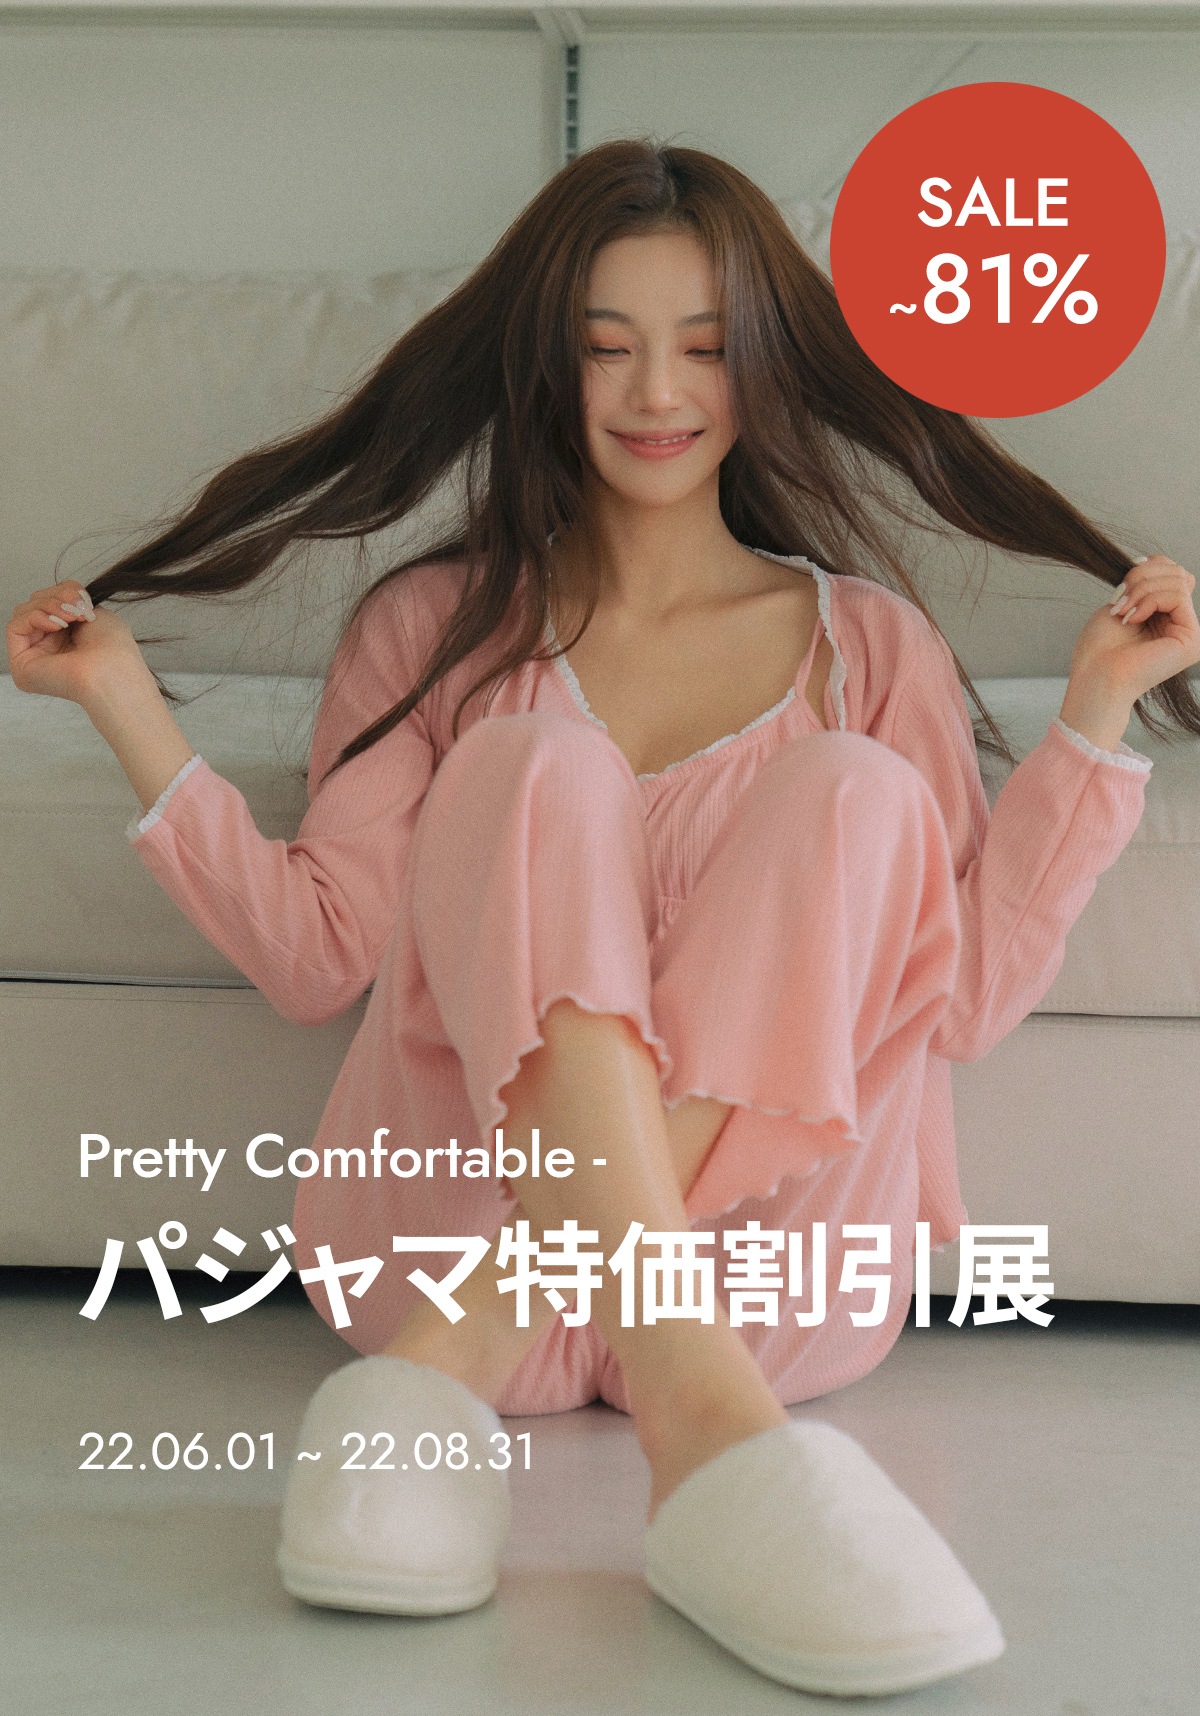 Pretty Comfortable - パジャマ特価割引展 ~81%